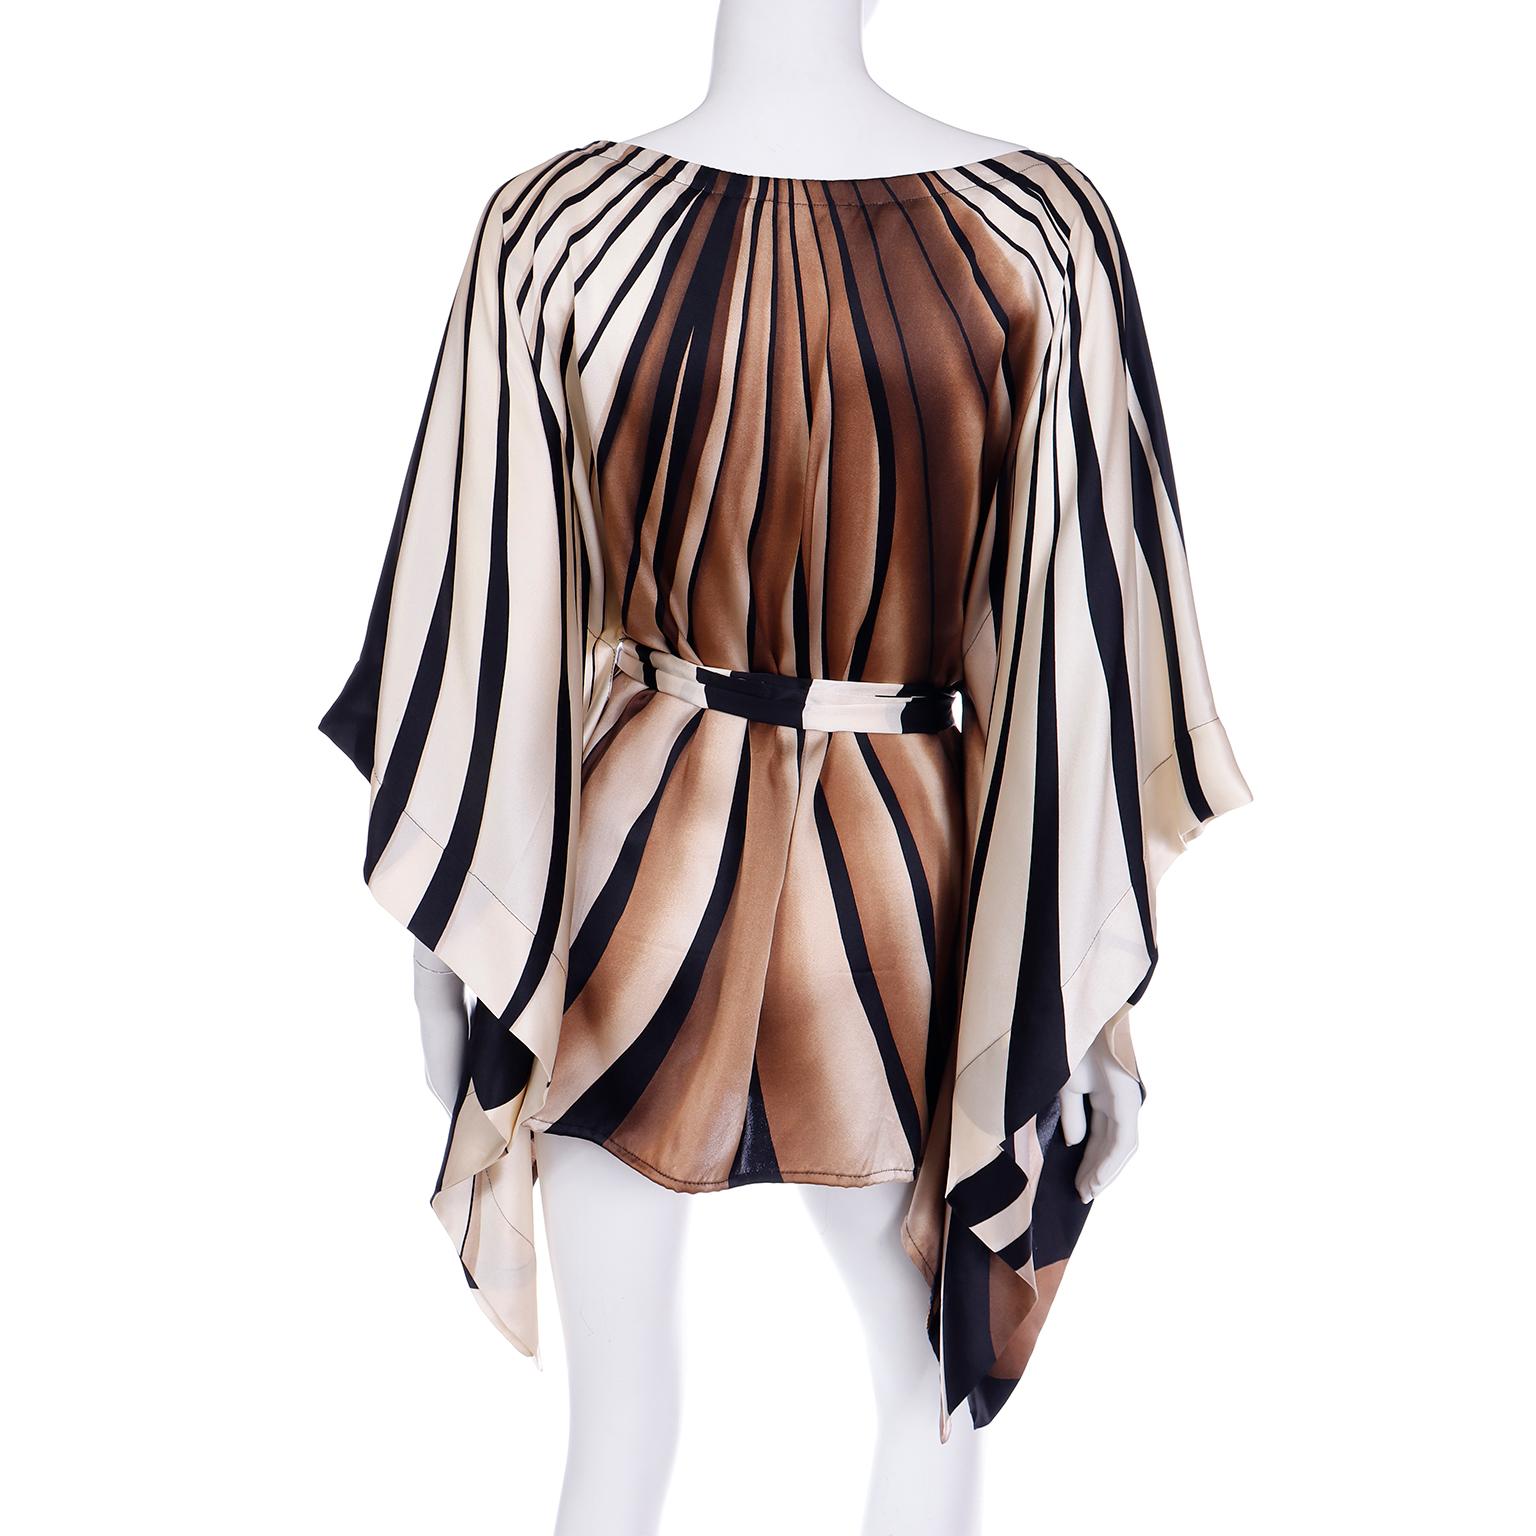 Vintage Silk Caftan Style Stripe Top in Black Brown & Ivory w Sash Belt For Sale 3